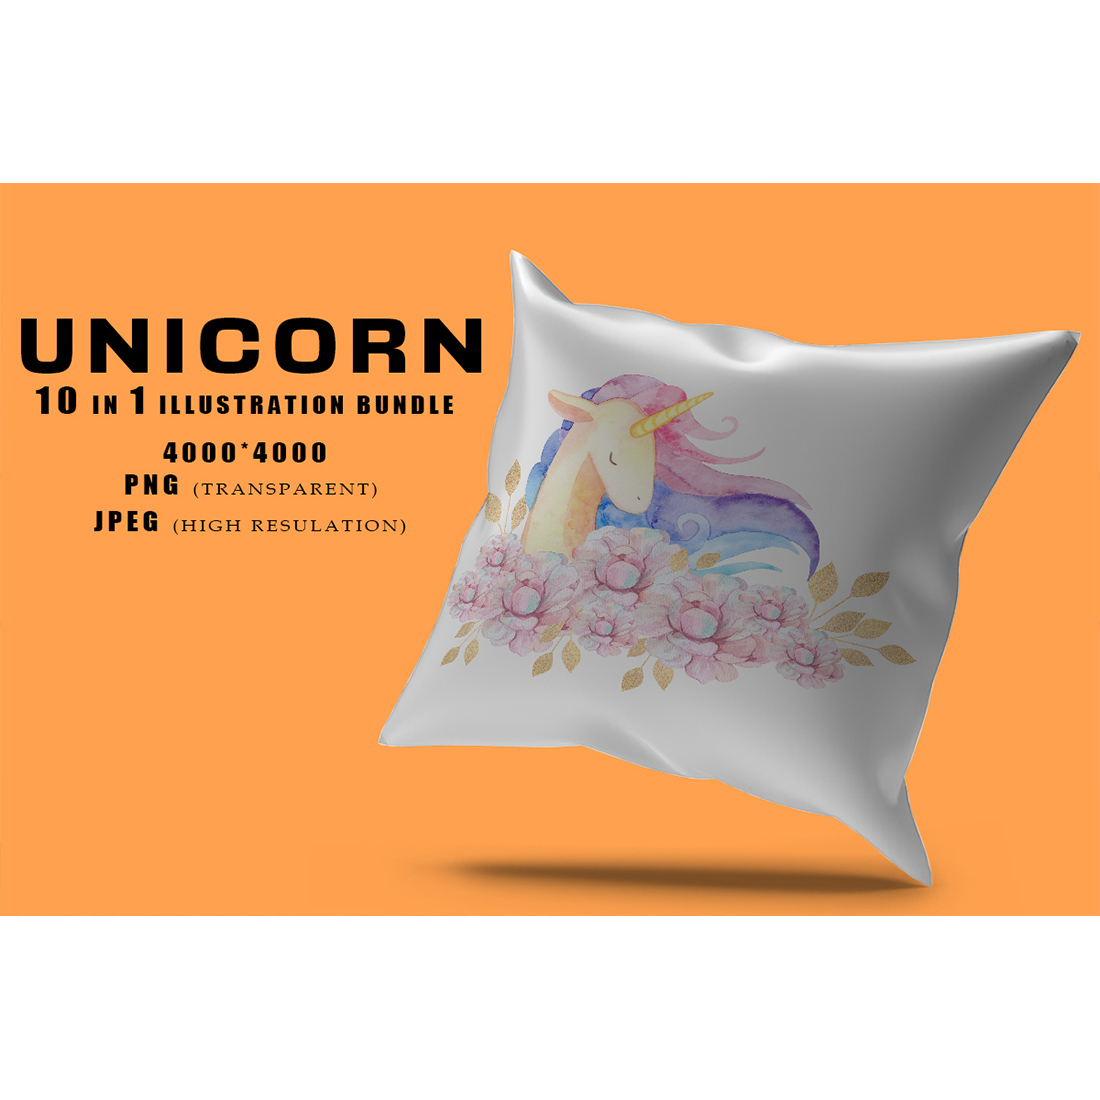 Image of pillow with amazing unicorn print